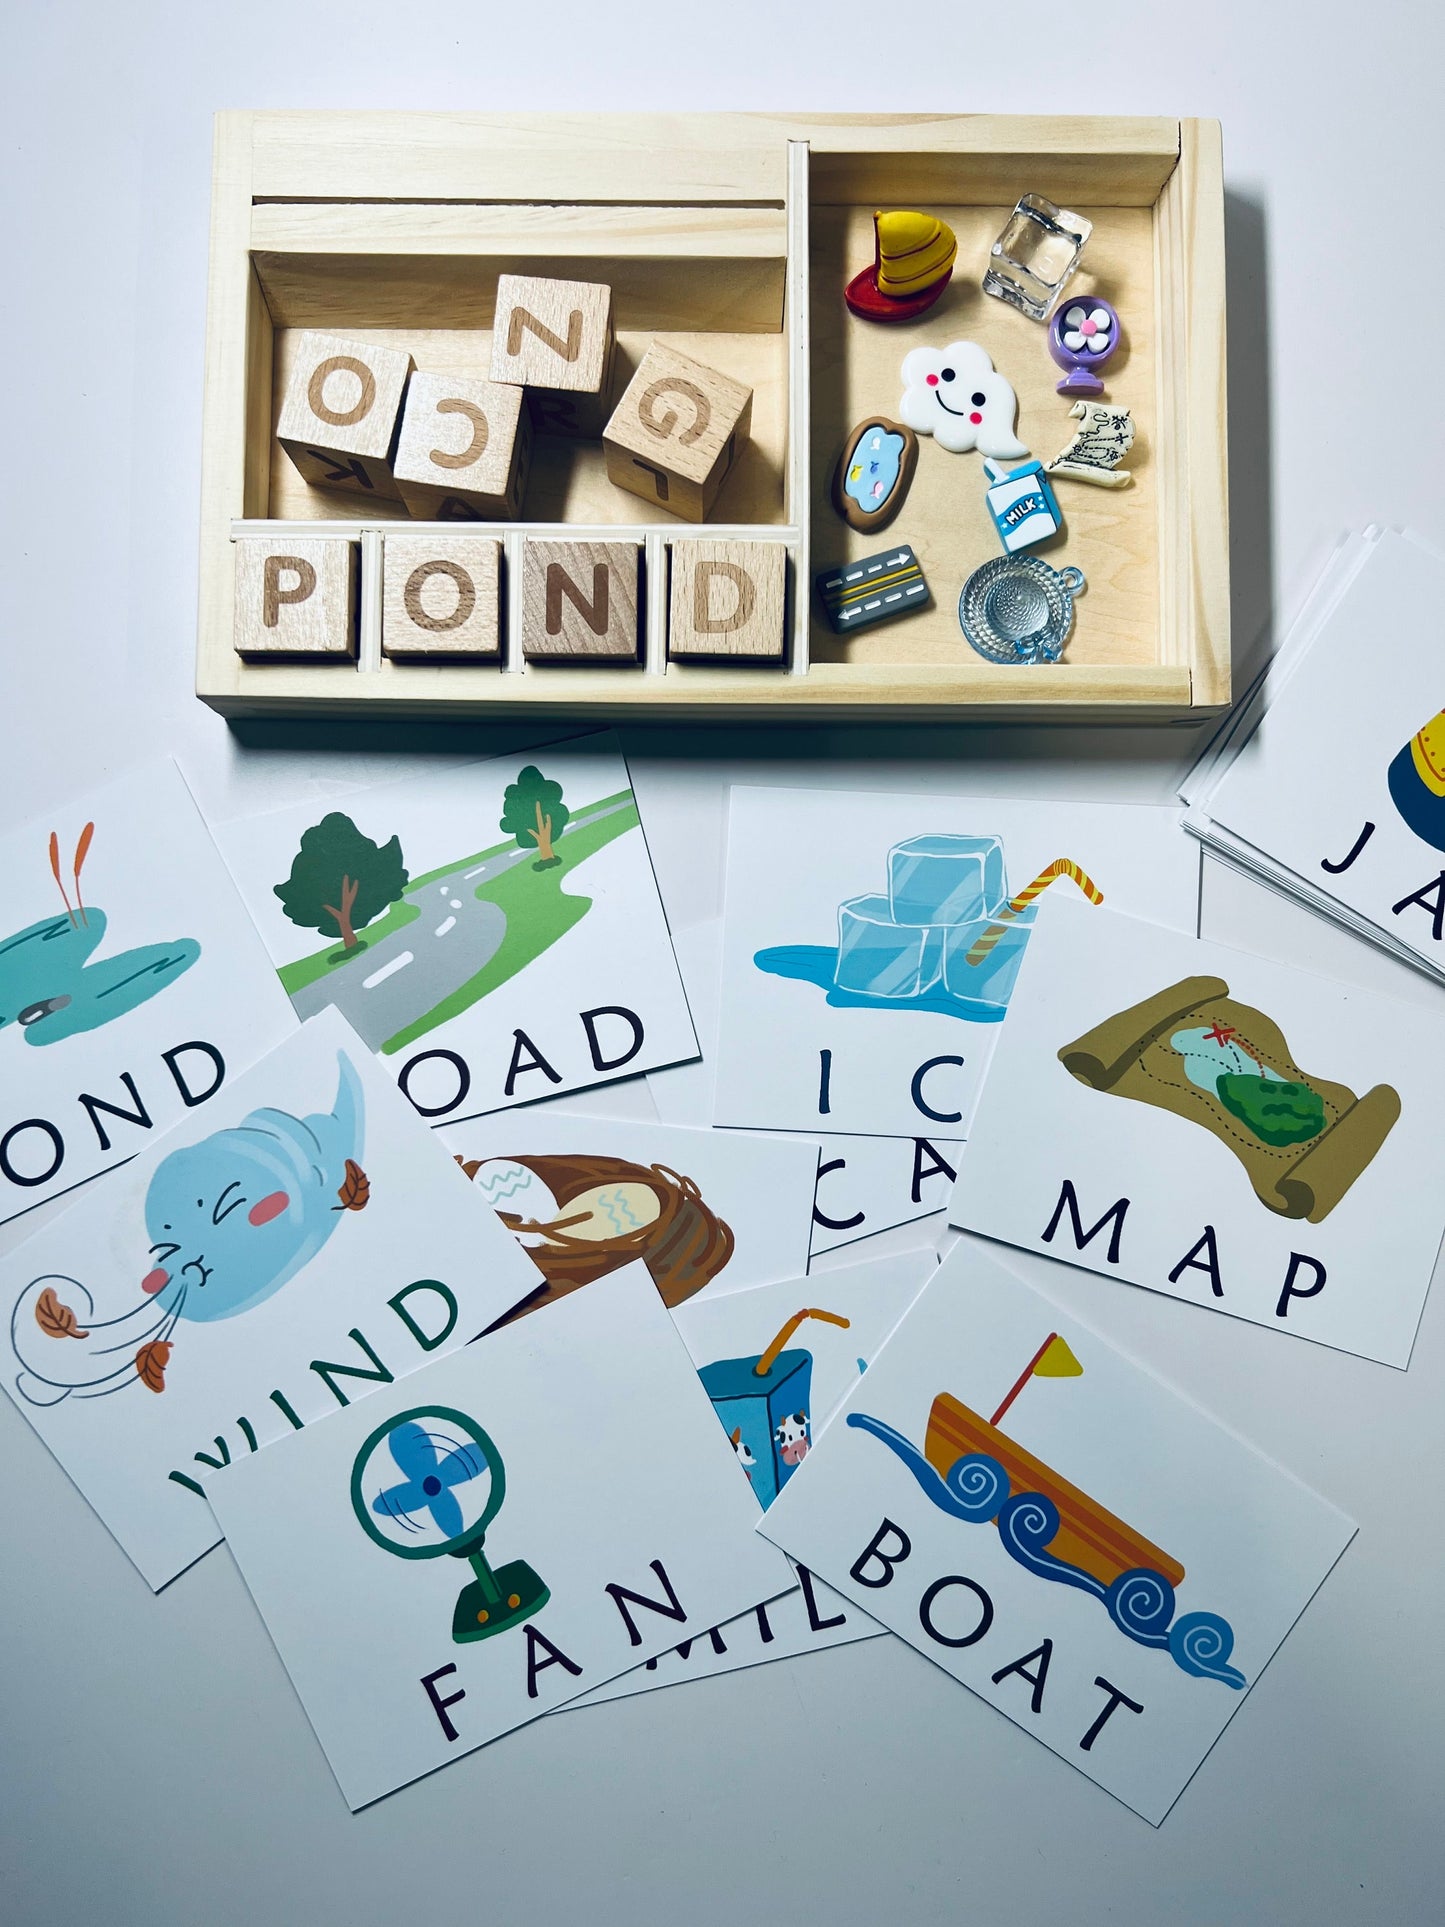 Bandeja de ortografía, tarjetas y 60 mini objetos-Tarjetas de palabras Montessori-Objetos del lenguaje